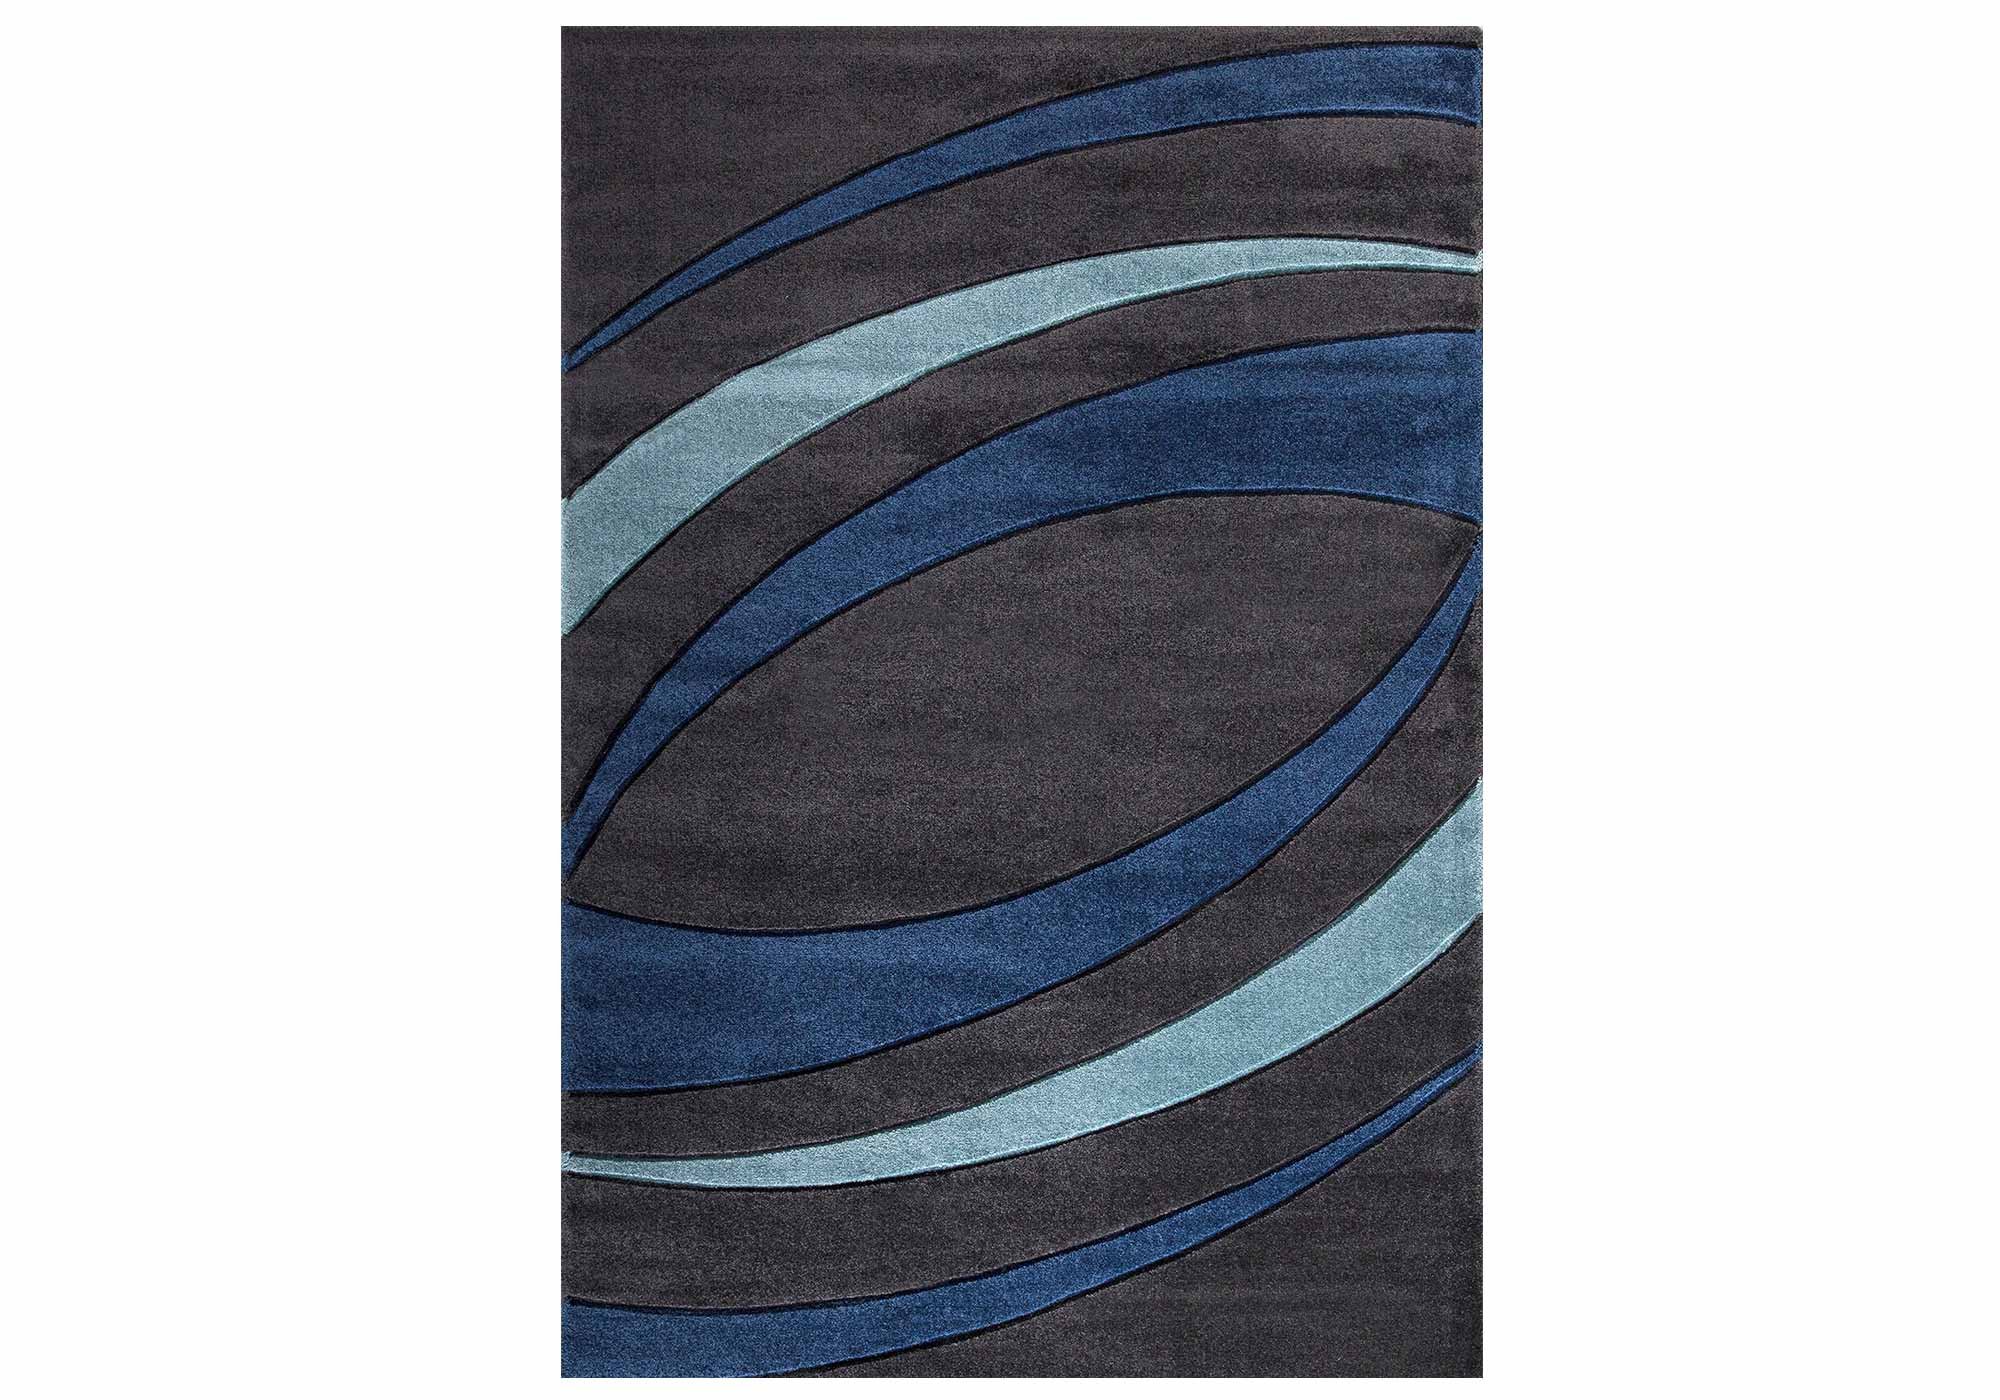 Festival Teppich 160 x 230 cm - anthrazit - blau - 11 mm Höhe - Relax 230